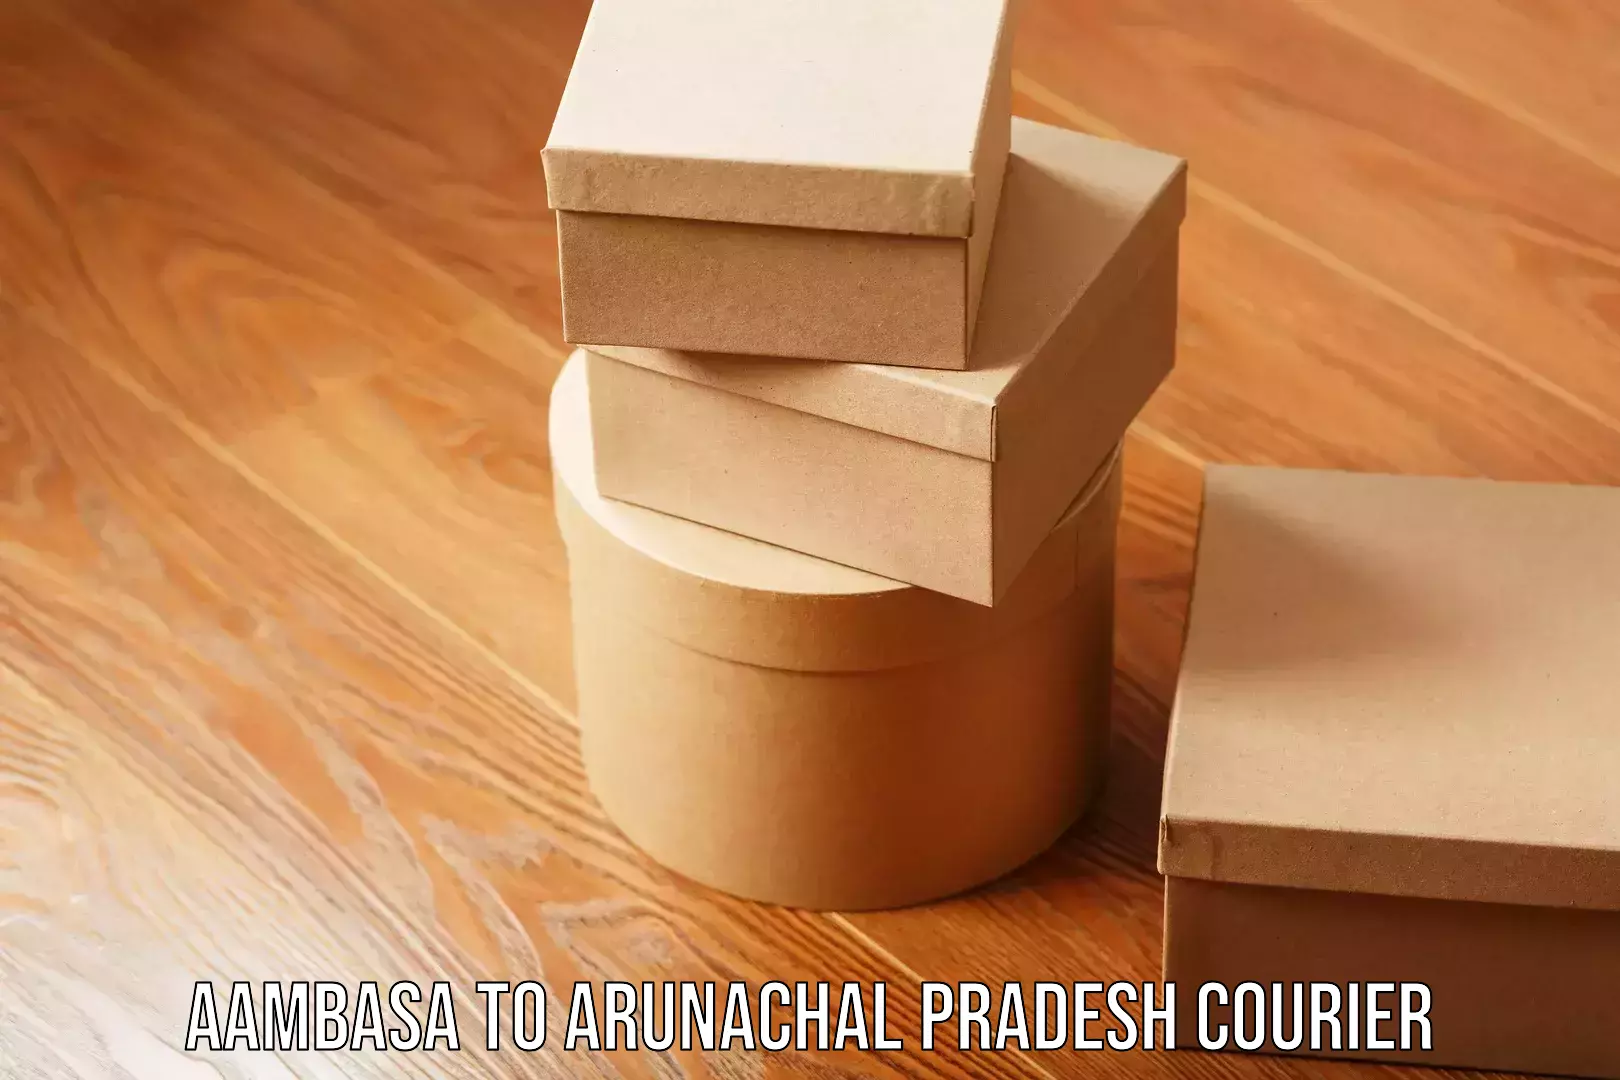 Multi-national courier services Aambasa to Arunachal Pradesh